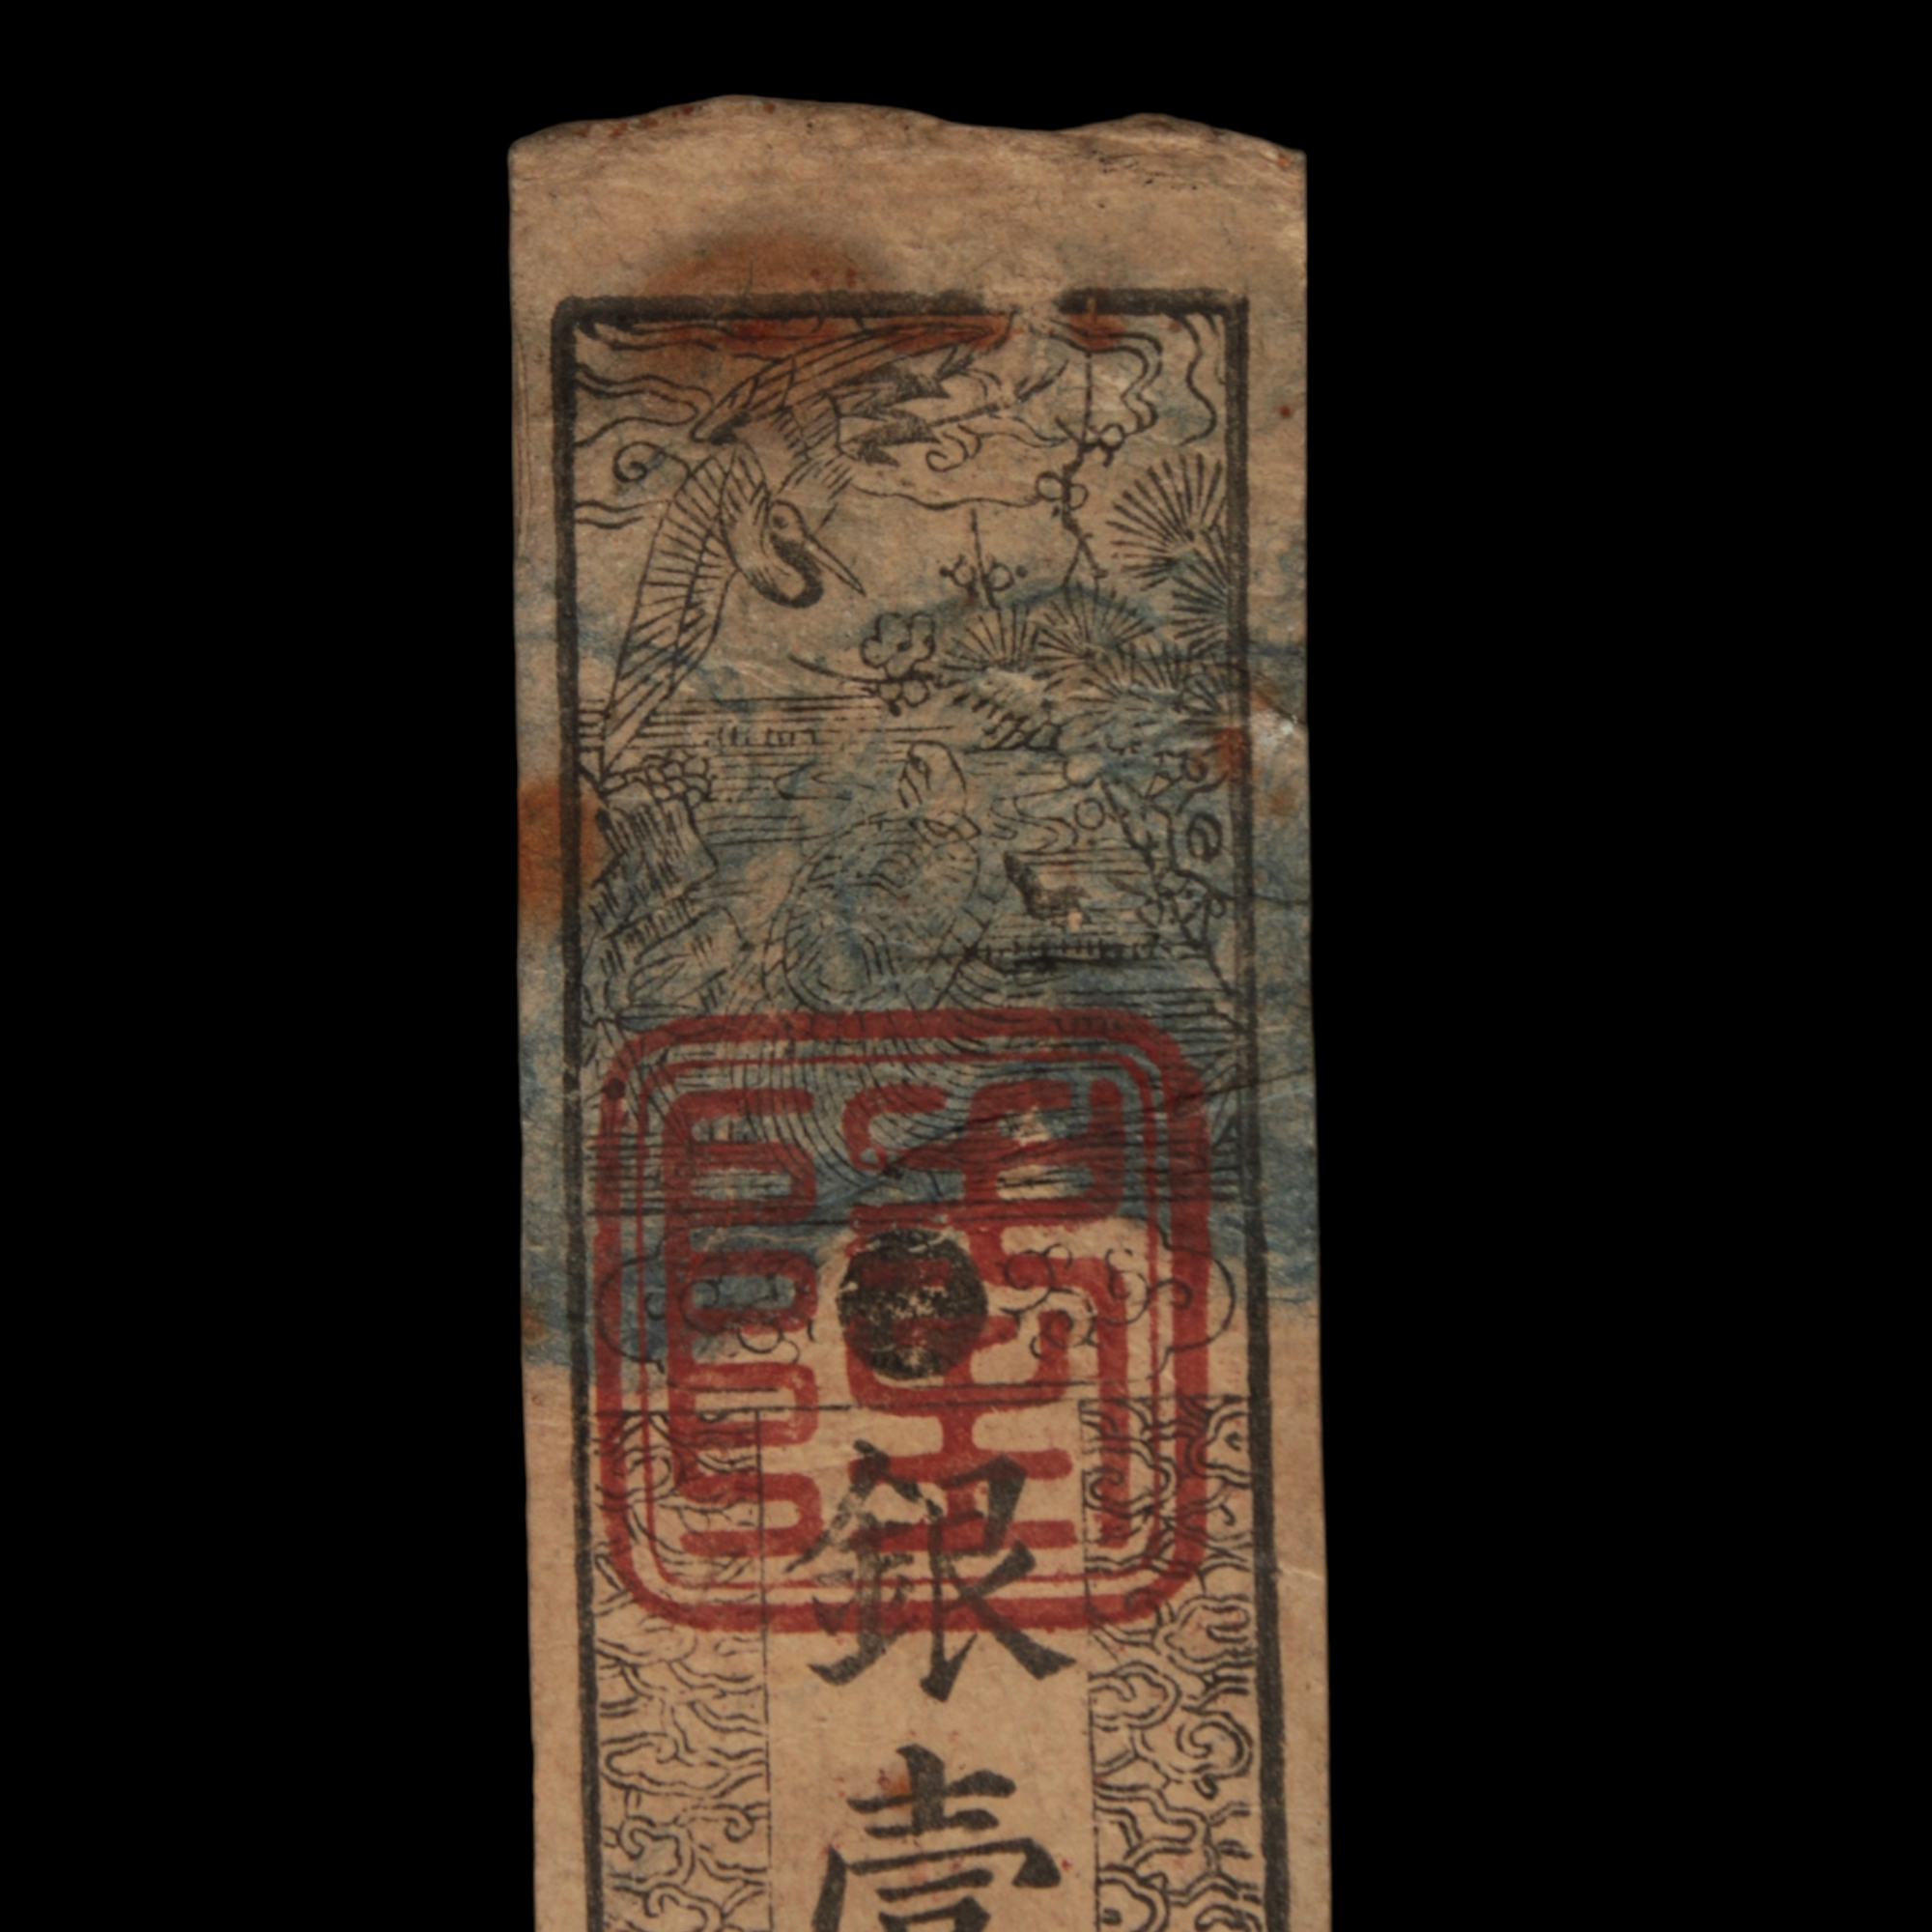 Hansatsu, Okada Clan, Bitchu Province (Cranes, Dragon) - Undated (c. 1700's to 1800's) - Edo Japan - 3/15/23 Auction